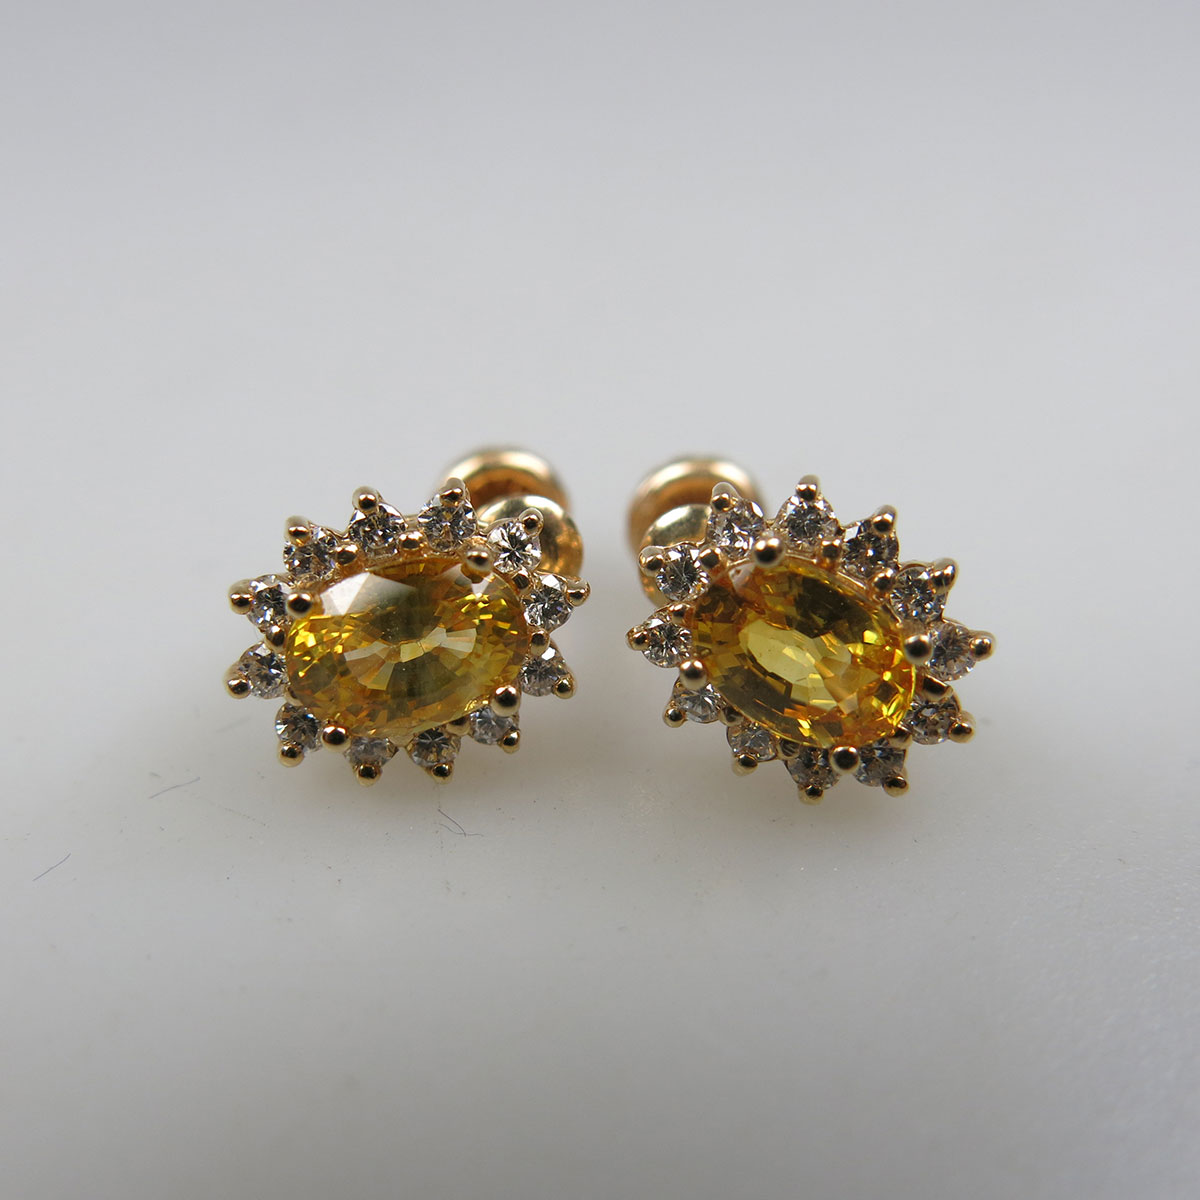 Pair Of 14k Yellow Gold Screw-Back Earrings